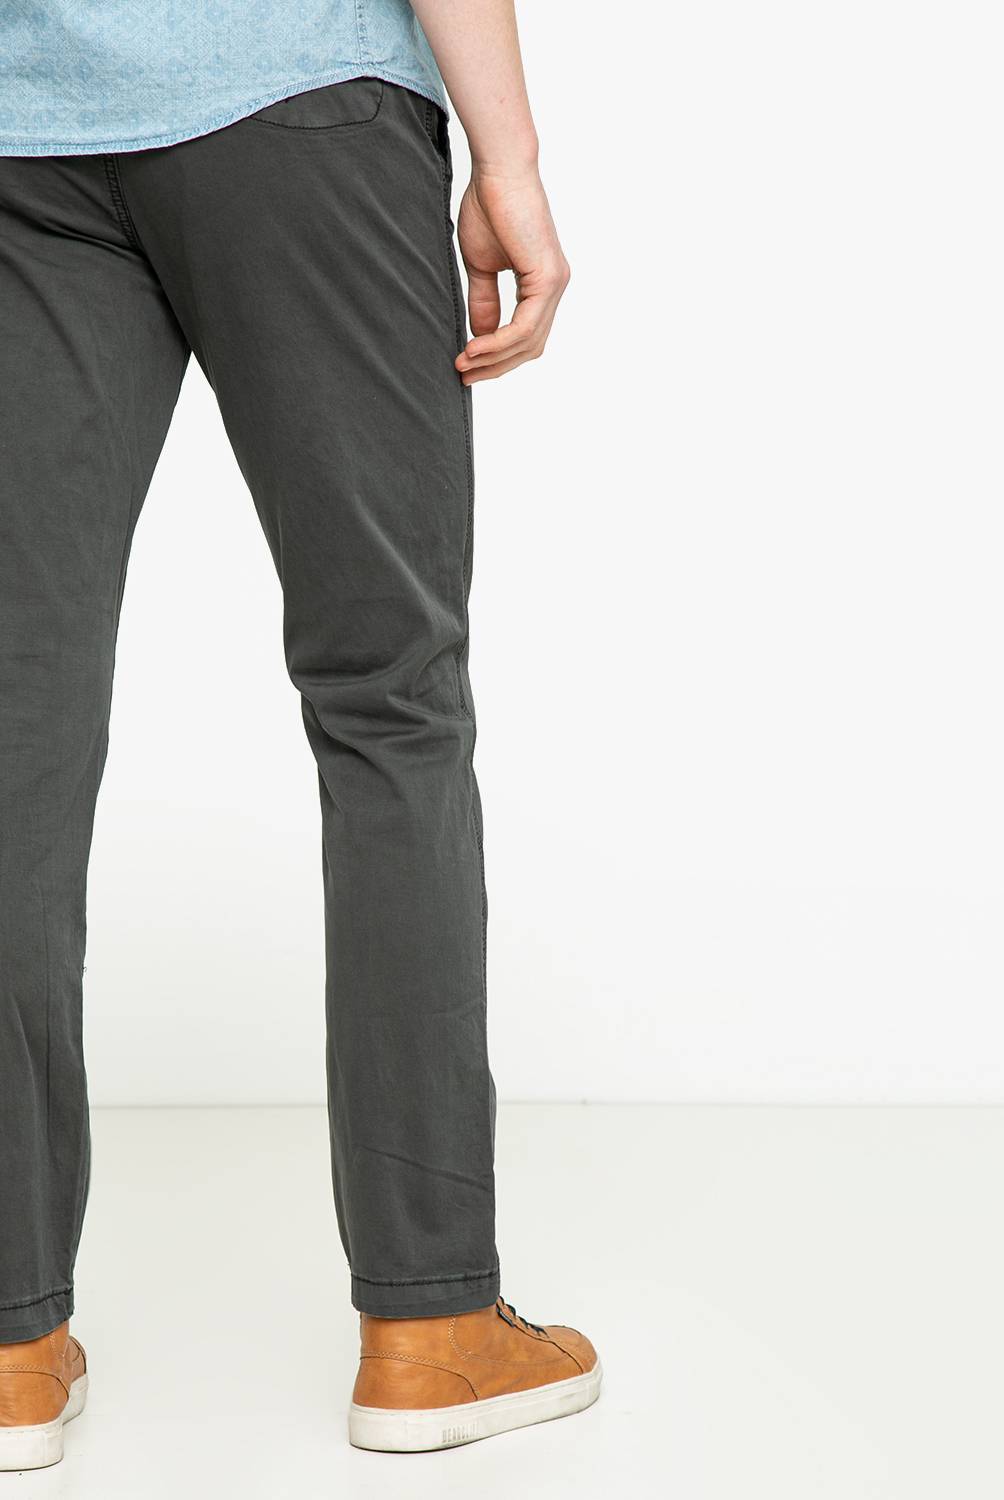 BEARCLIFF - Pantalón Casual Slim Fit